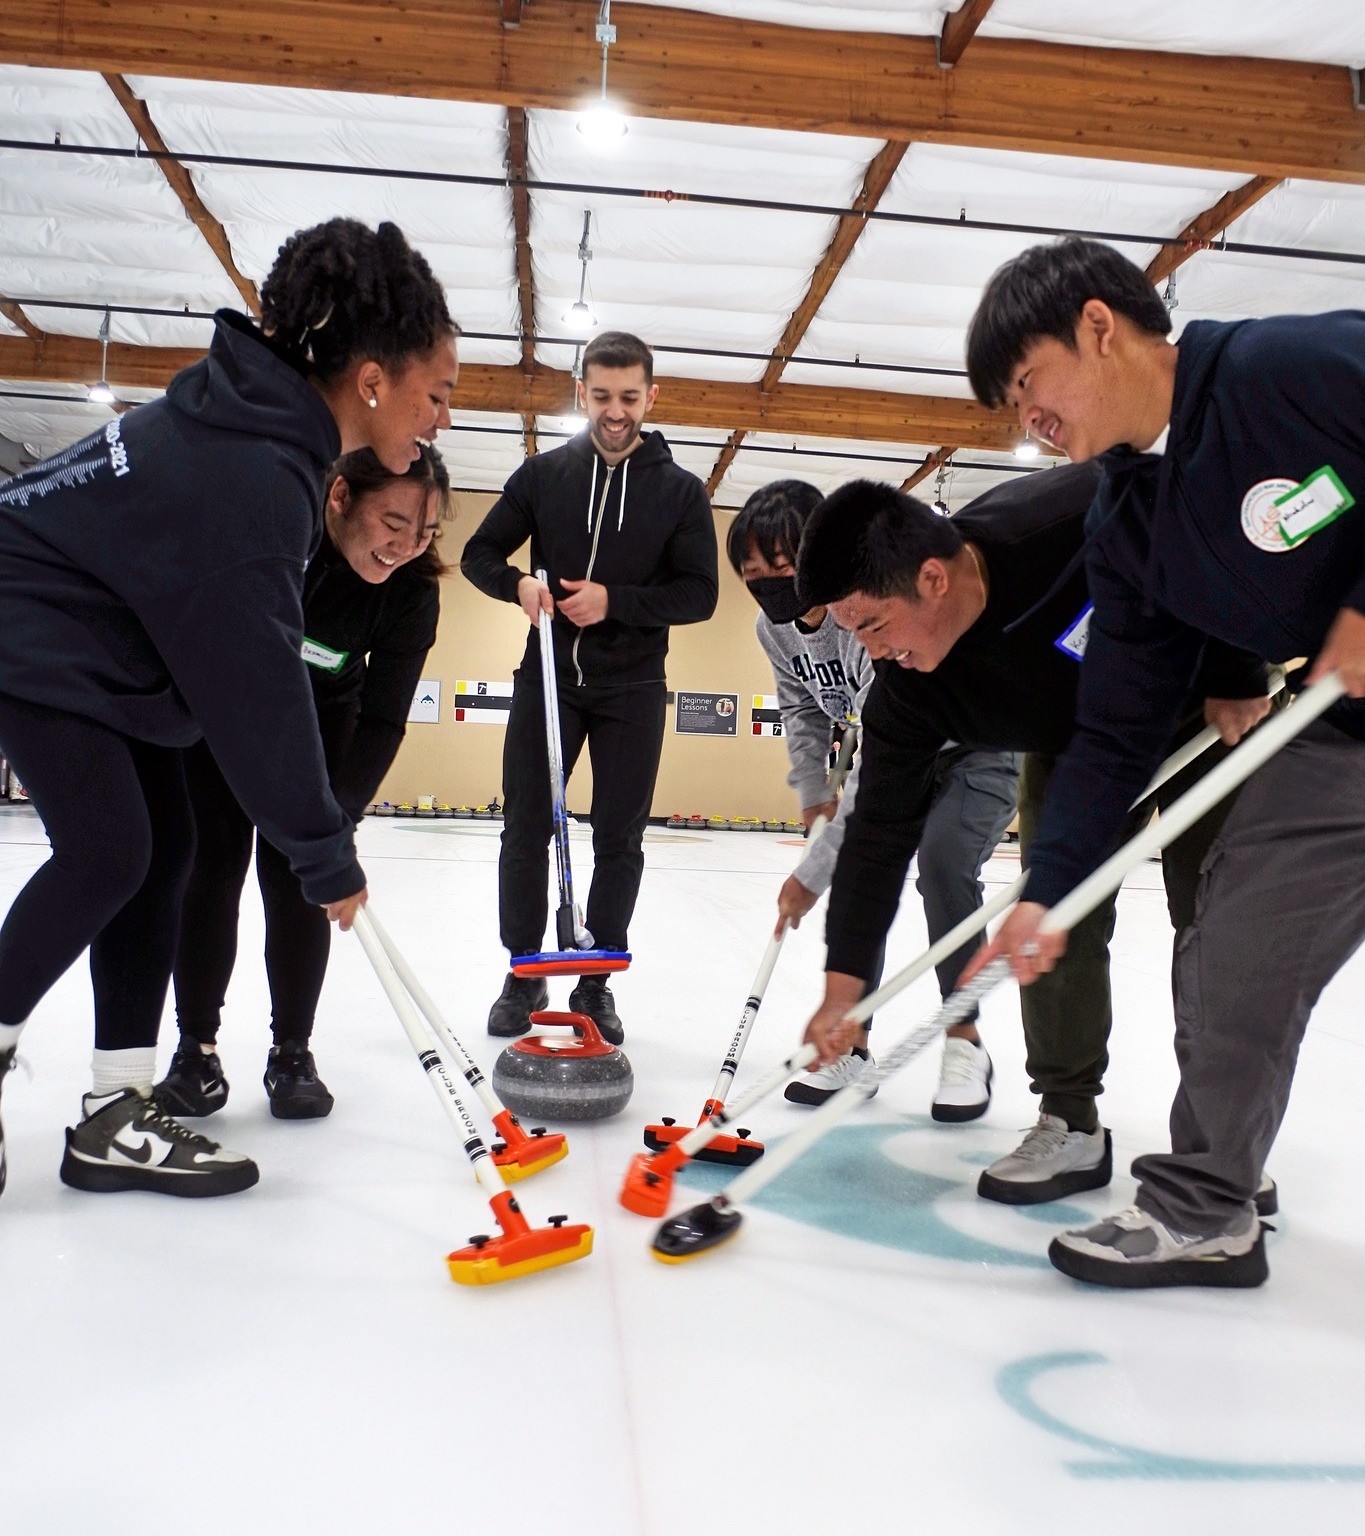 San Francisco Bay Area Curling Club - Curling center in Oakland California  serving the San Francisco Bay Area